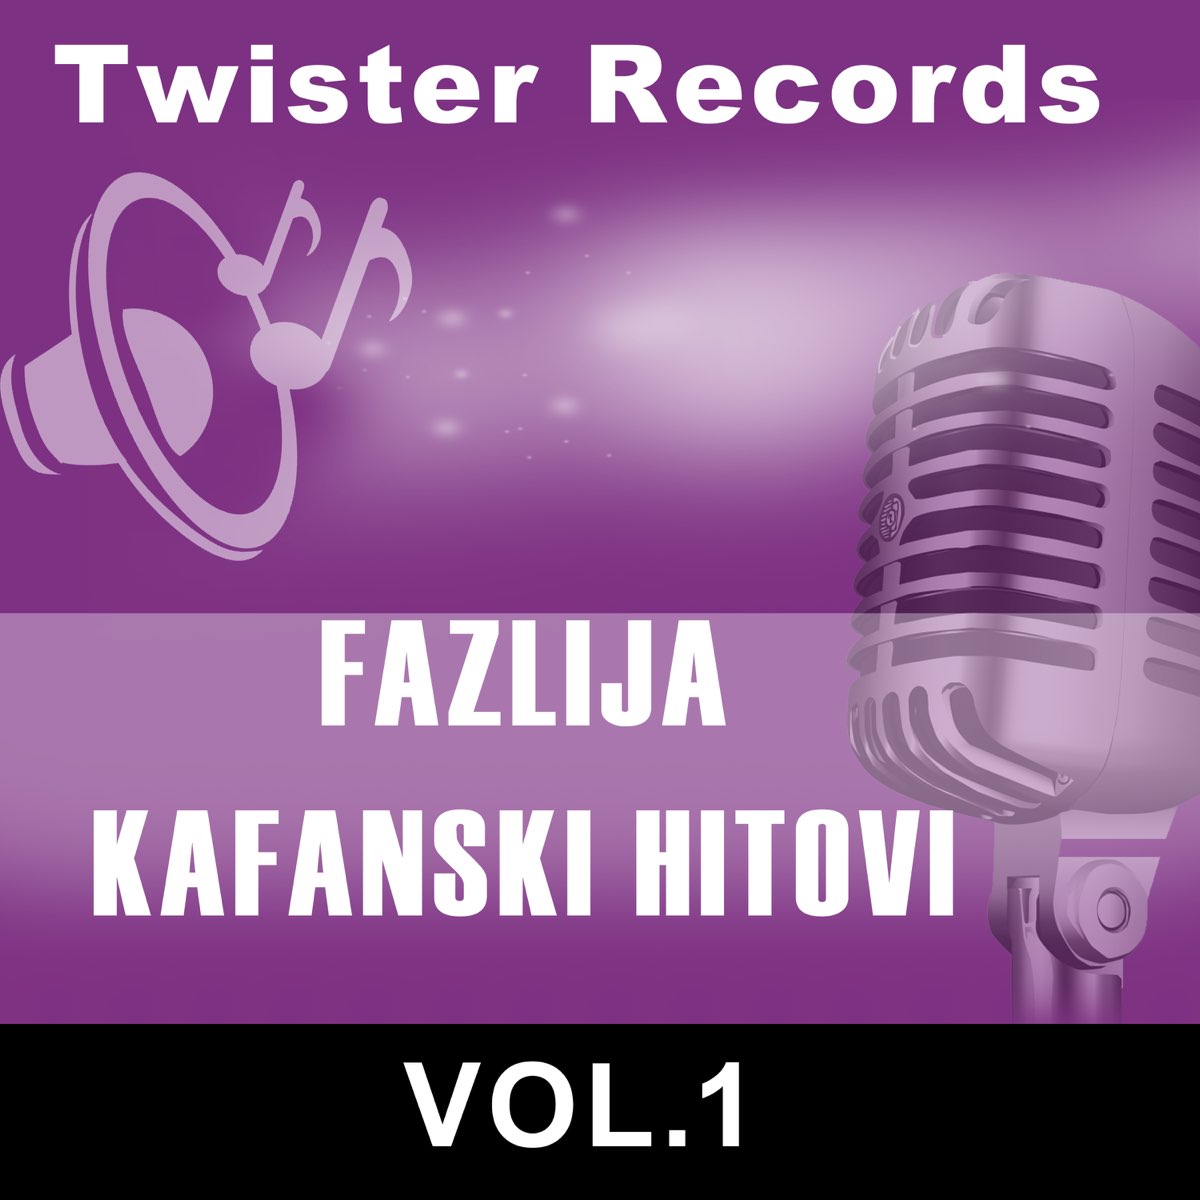 Kafanski Hitovi Vol.1 - Album by Fazlija - Apple Music